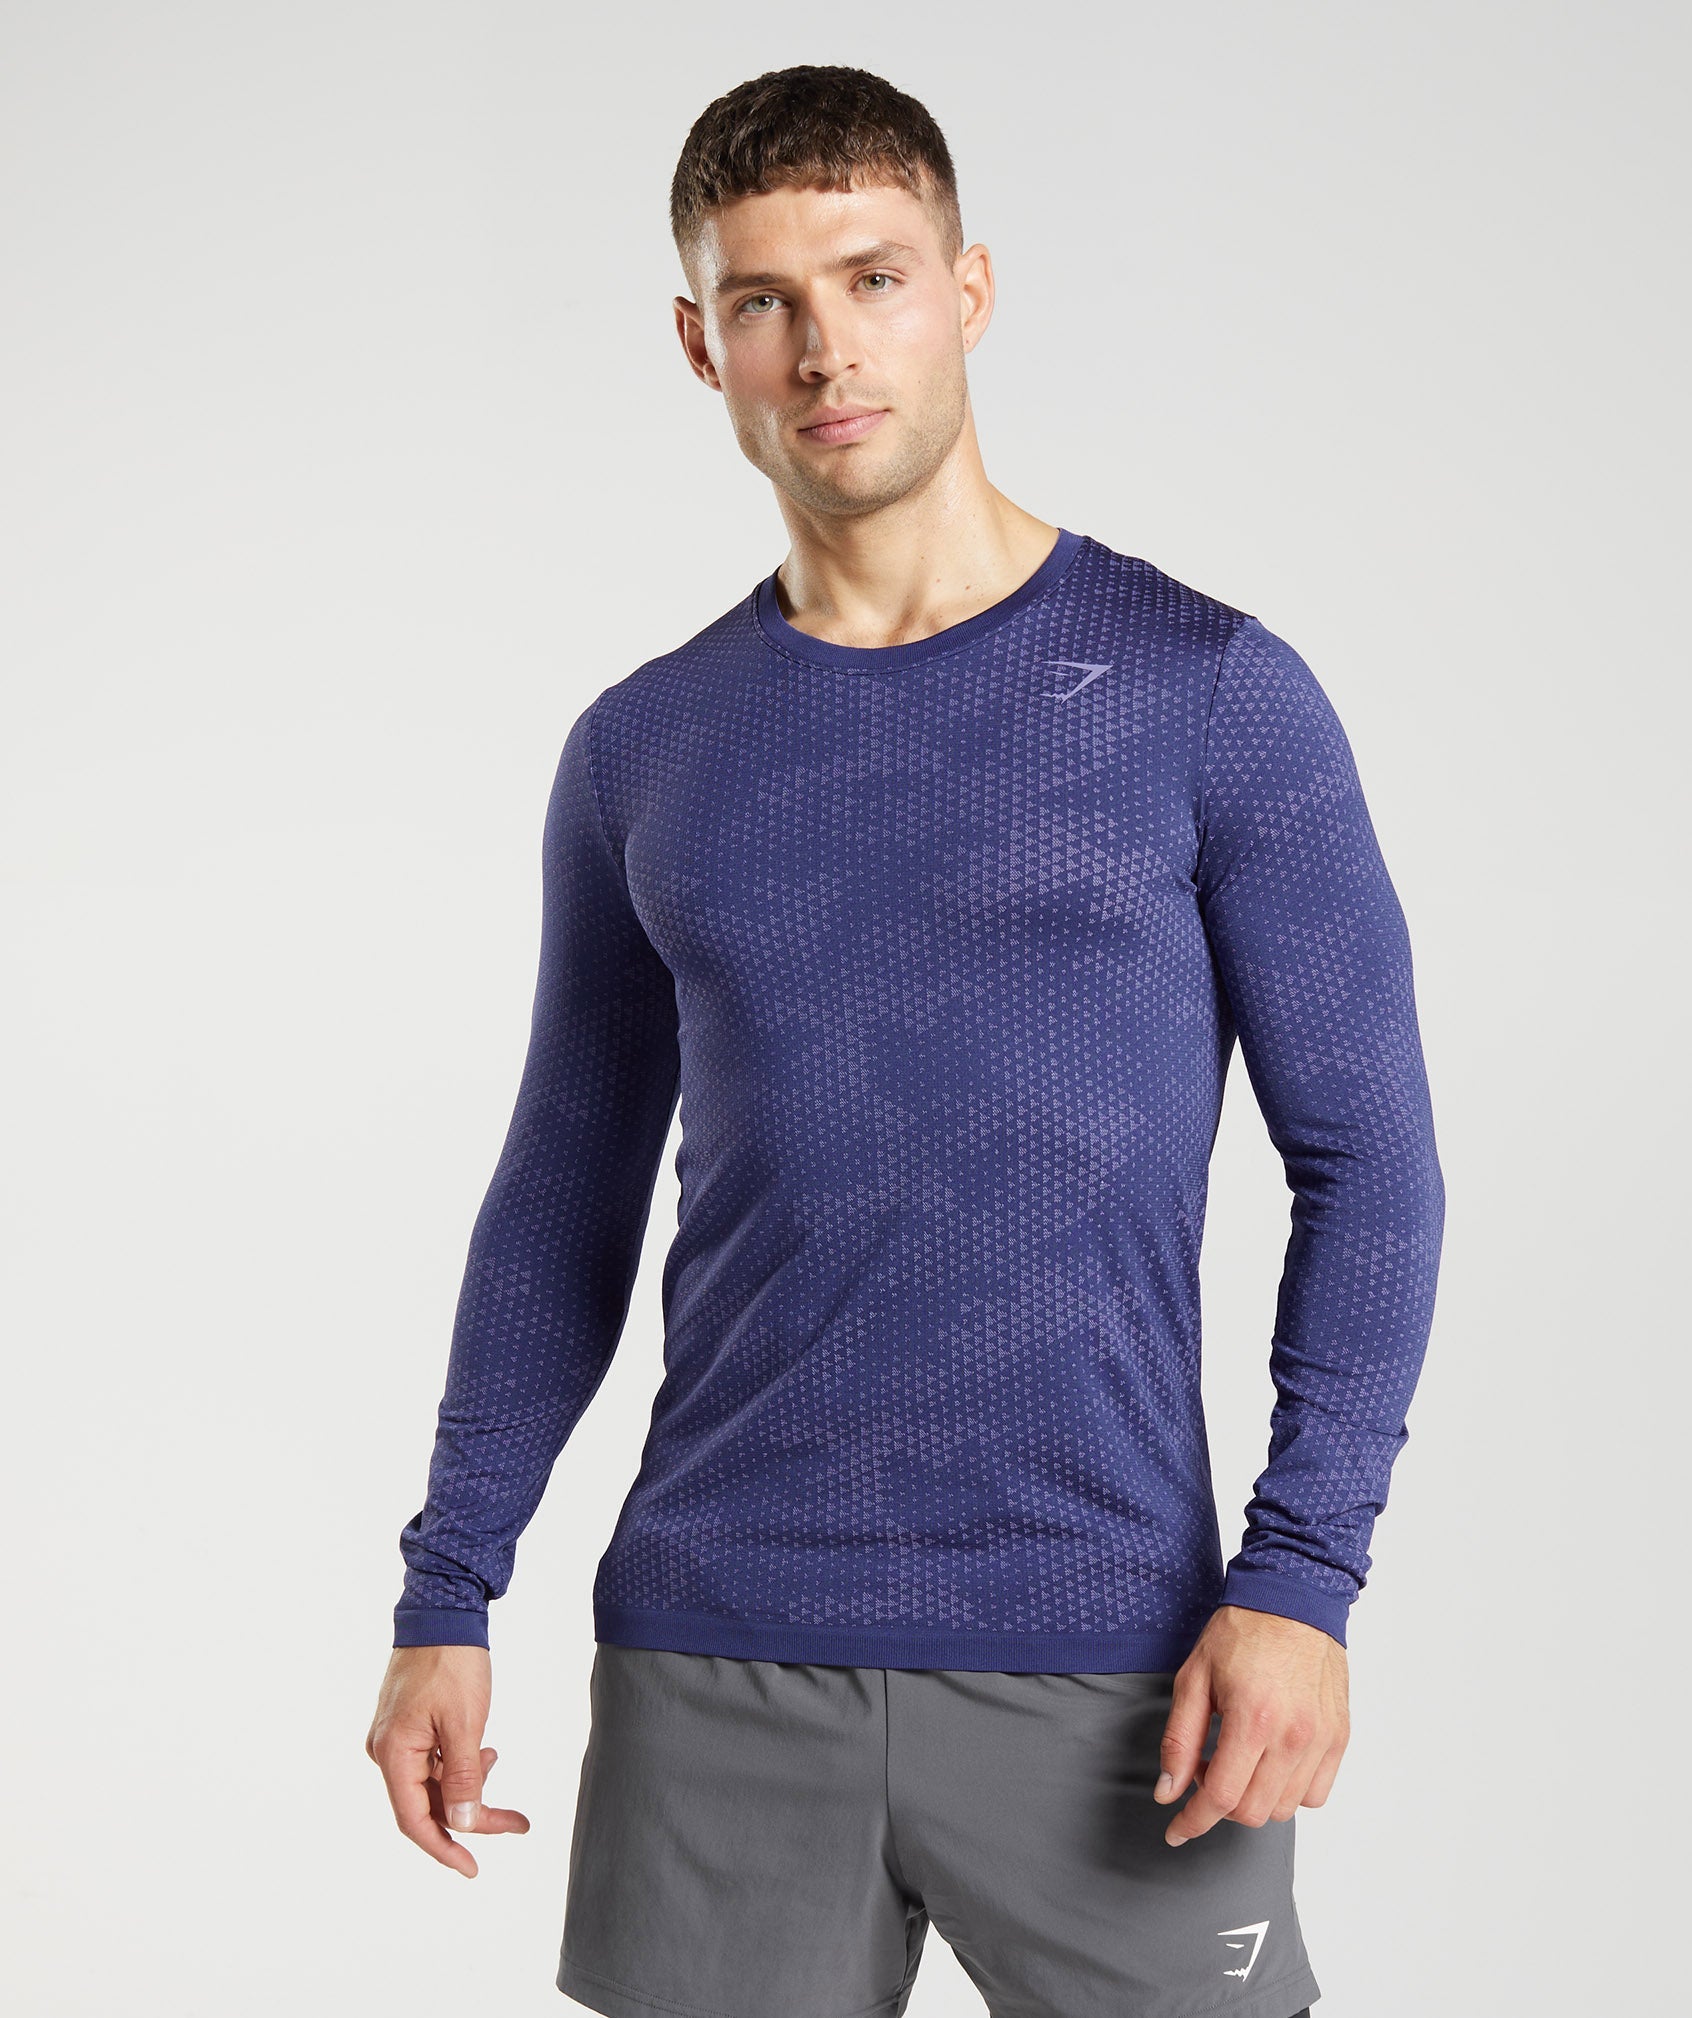 Sport Seamless Long Sleeve T-Shirt dans Neptune Purple/Velvet Purpleest en rupture de stock